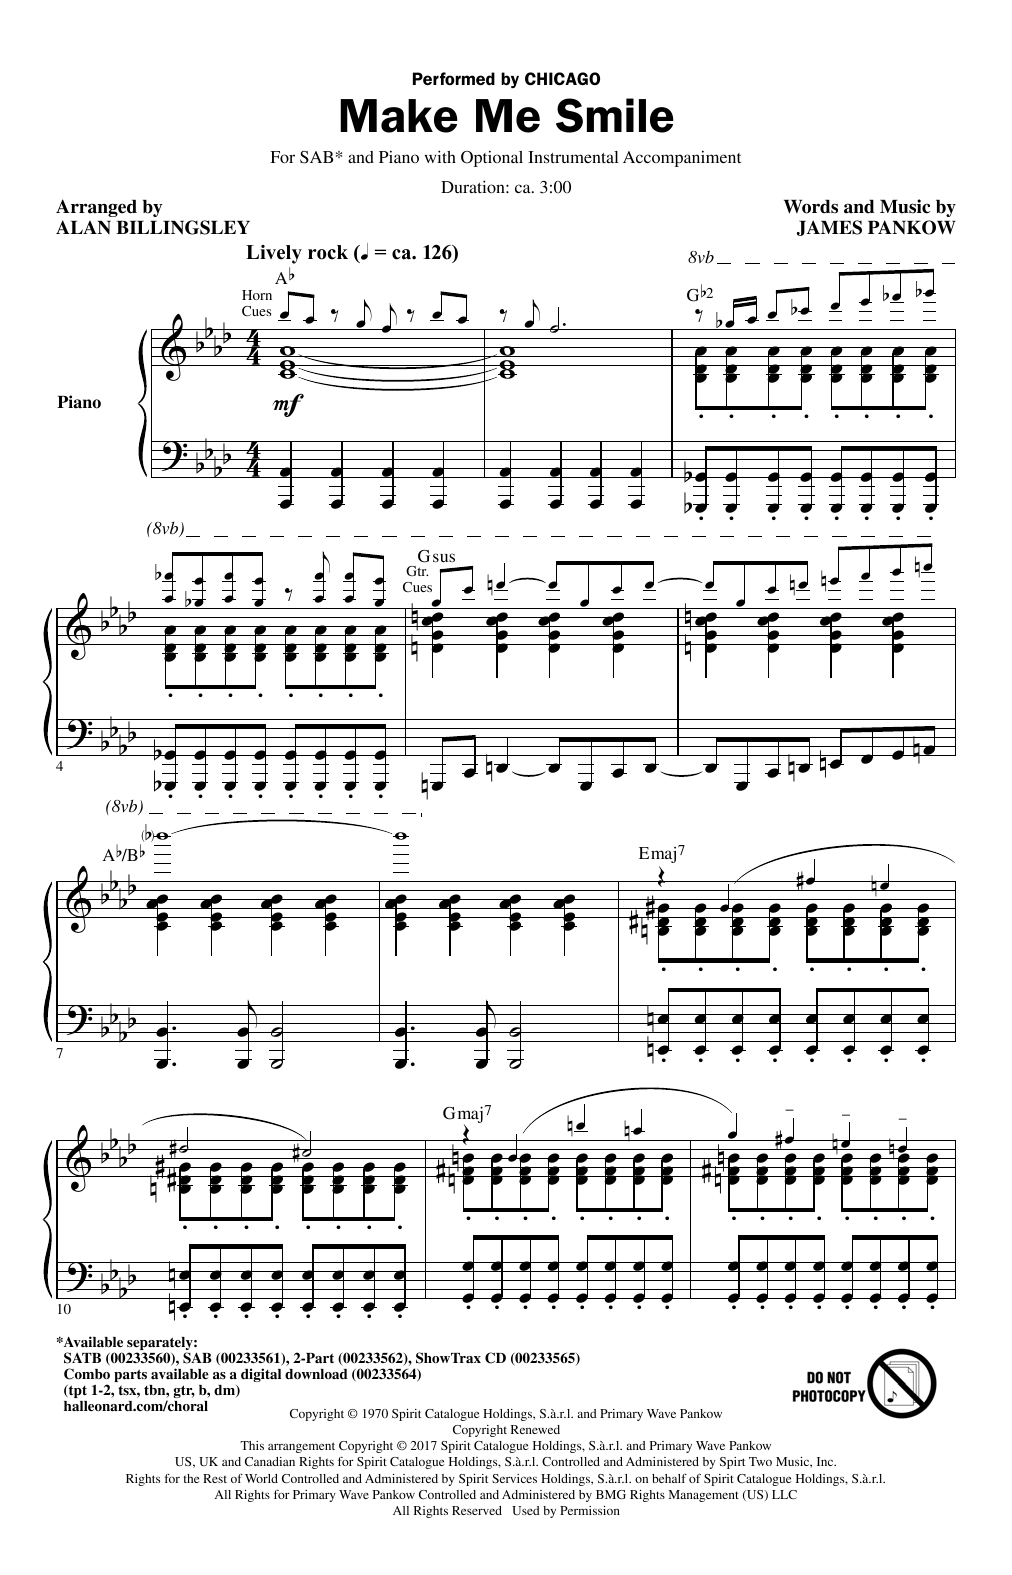 Alan Billingsley Make Me Smile sheet music notes and chords. Download Printable PDF.